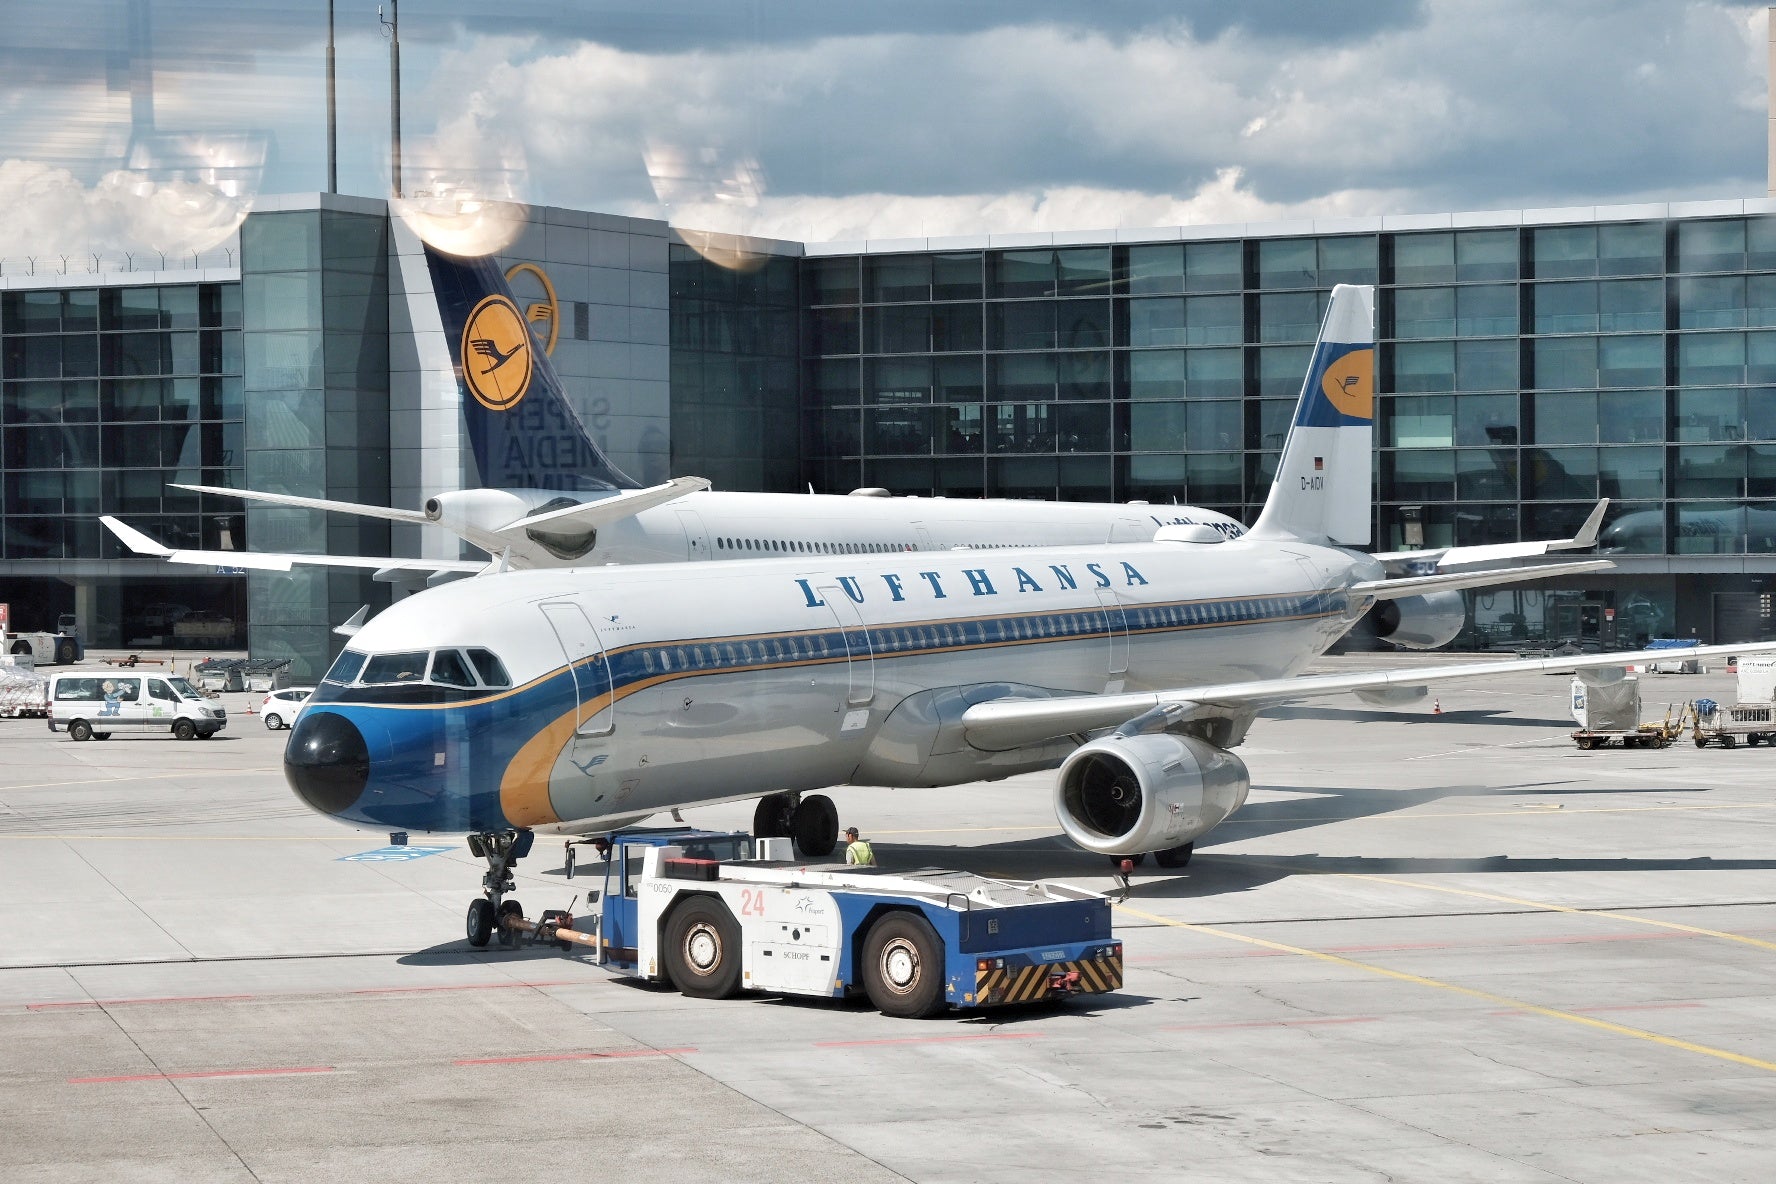 Lufthansa Special Edition – Wunderkey Carbon Air